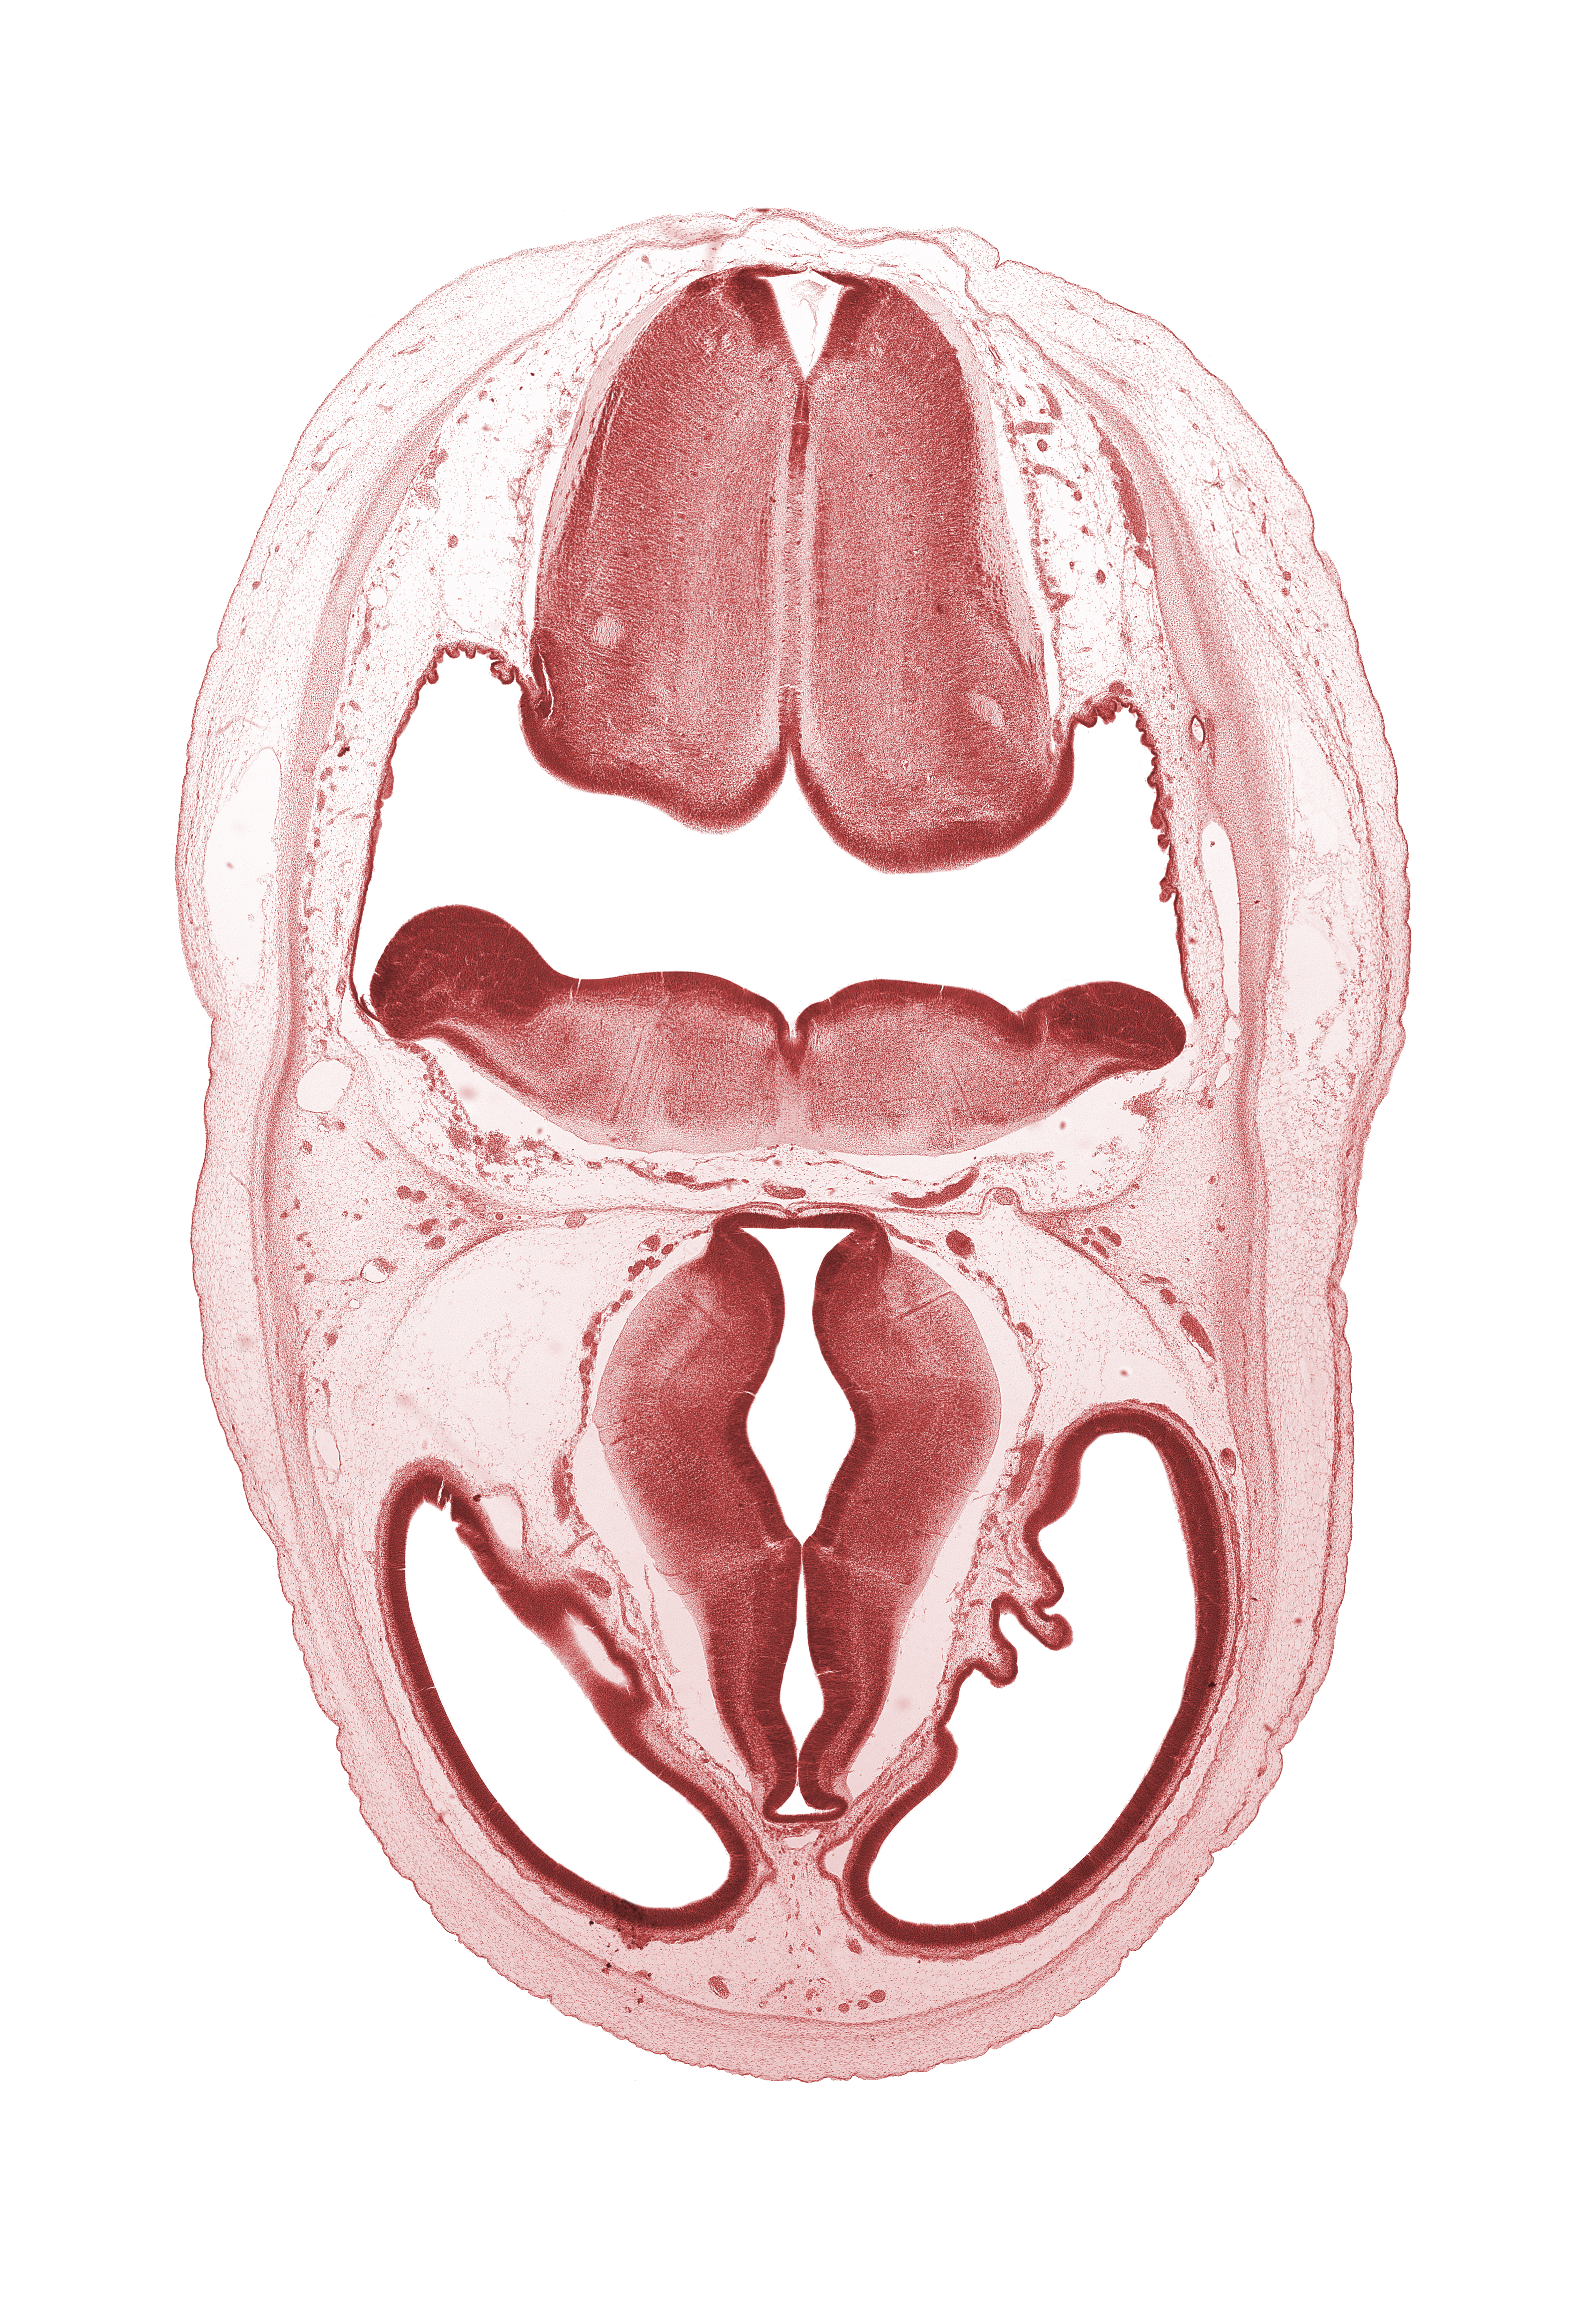 artifact separation(s), basilar artery, cerebral vesicle (telencephalon), dorsal thalamus, dural band for tentorium cerebelli, endolymphatic duct, hypothalamic sulcus, hypothalamus, intermediate zone, lateral ventricle, marginal zone, osteogenic layer, posterior communicating artery, subarachnoid space, third ventricle, ventral thalamus, ventricular zone, zona limitans intrathalamica